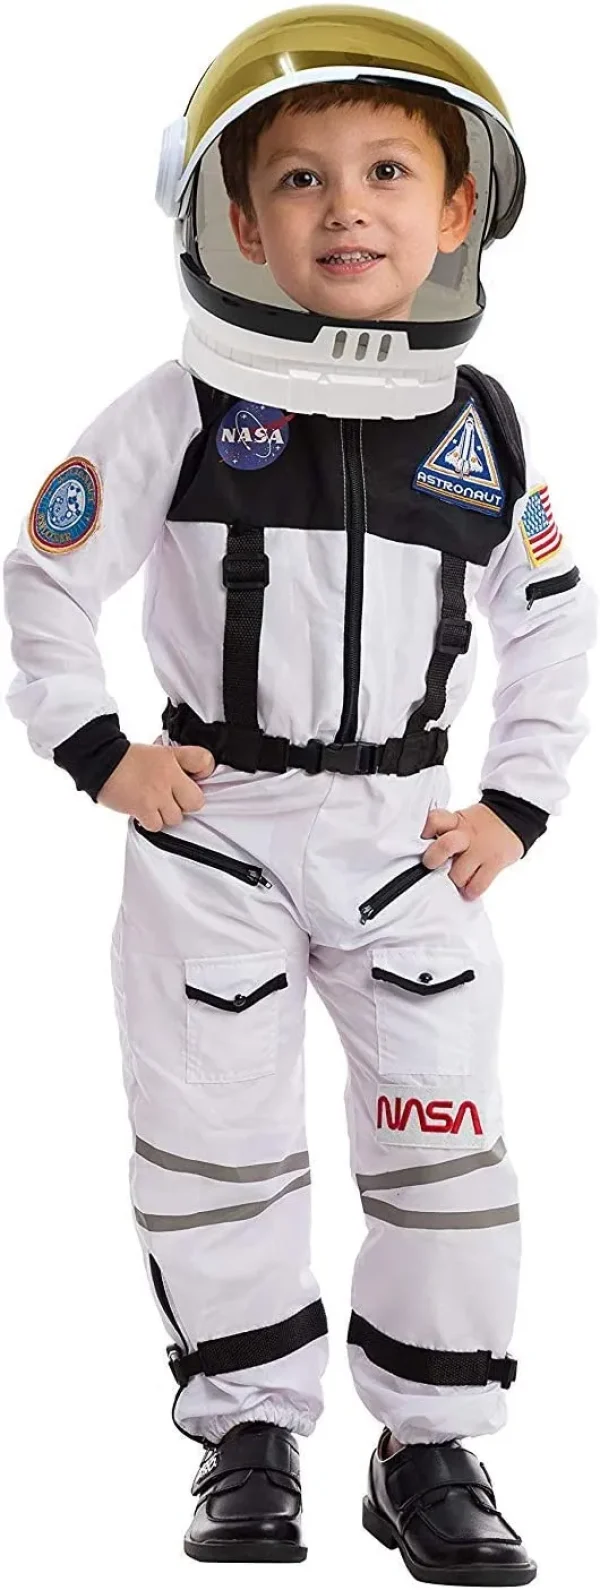 Kids Astronaut Halloween Costume with Movable Helmet